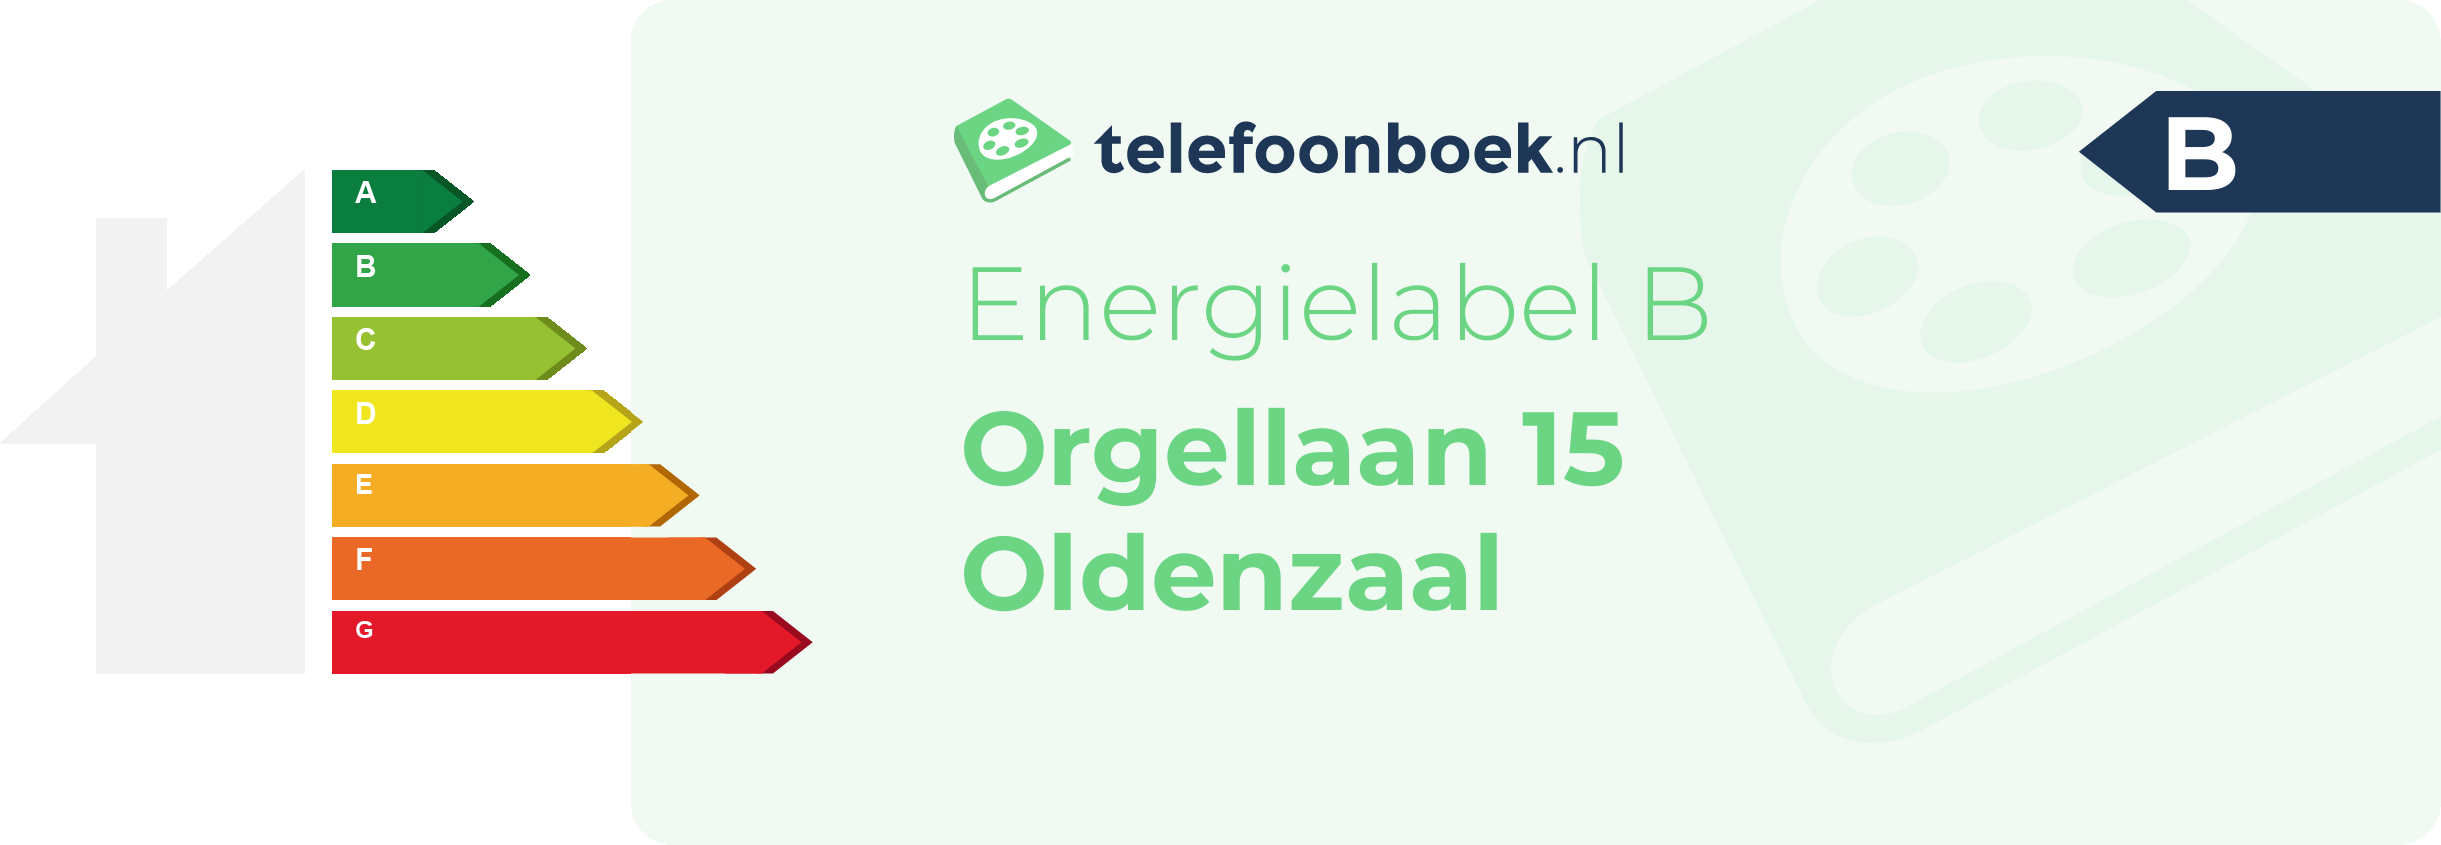 Energielabel Orgellaan 15 Oldenzaal